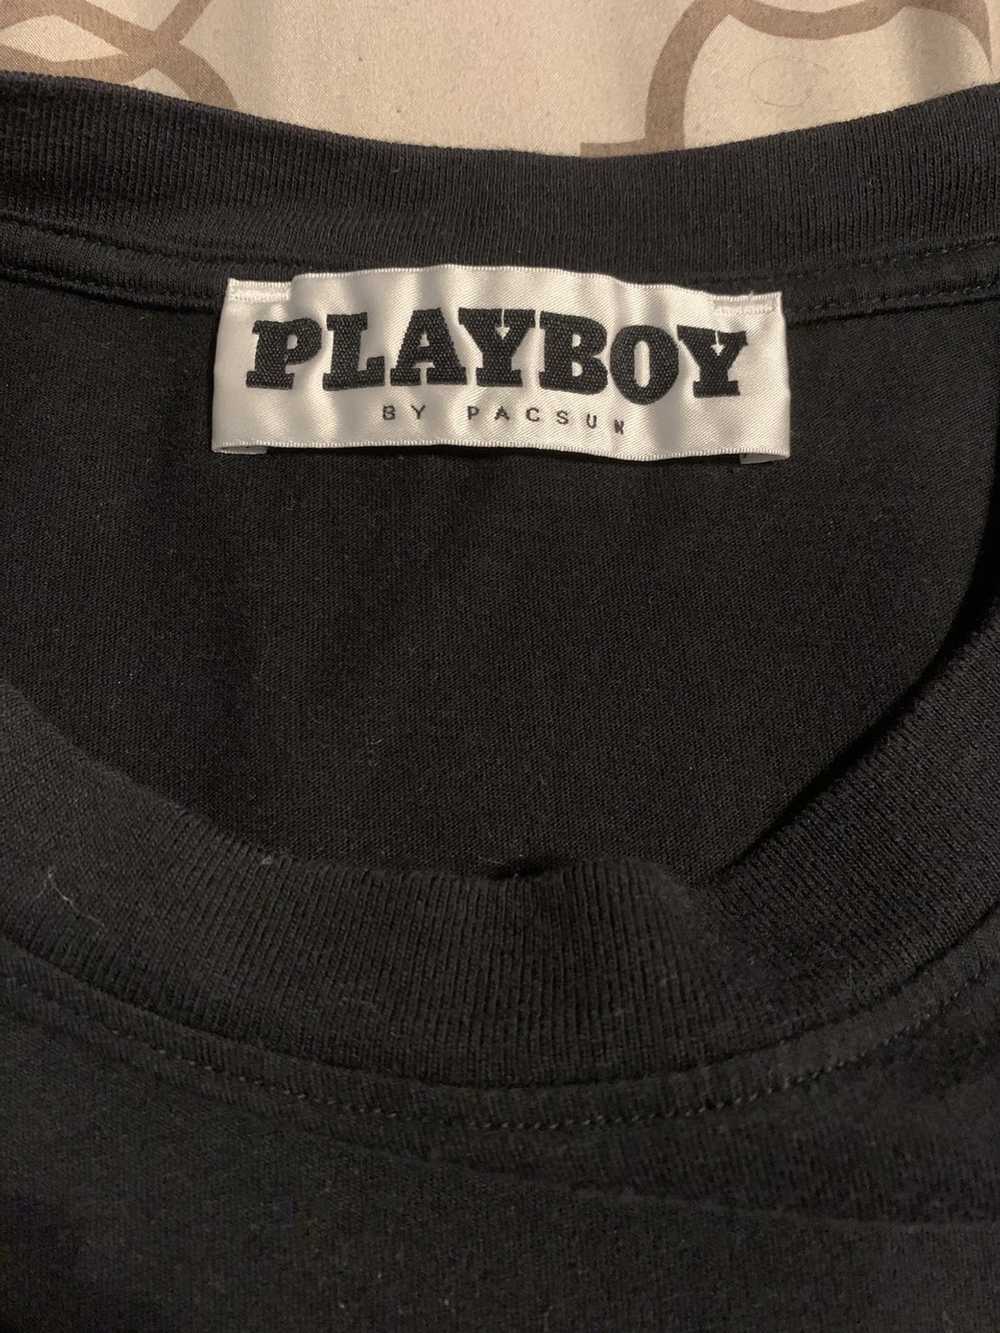 Playboy playboy long sleeve - image 3